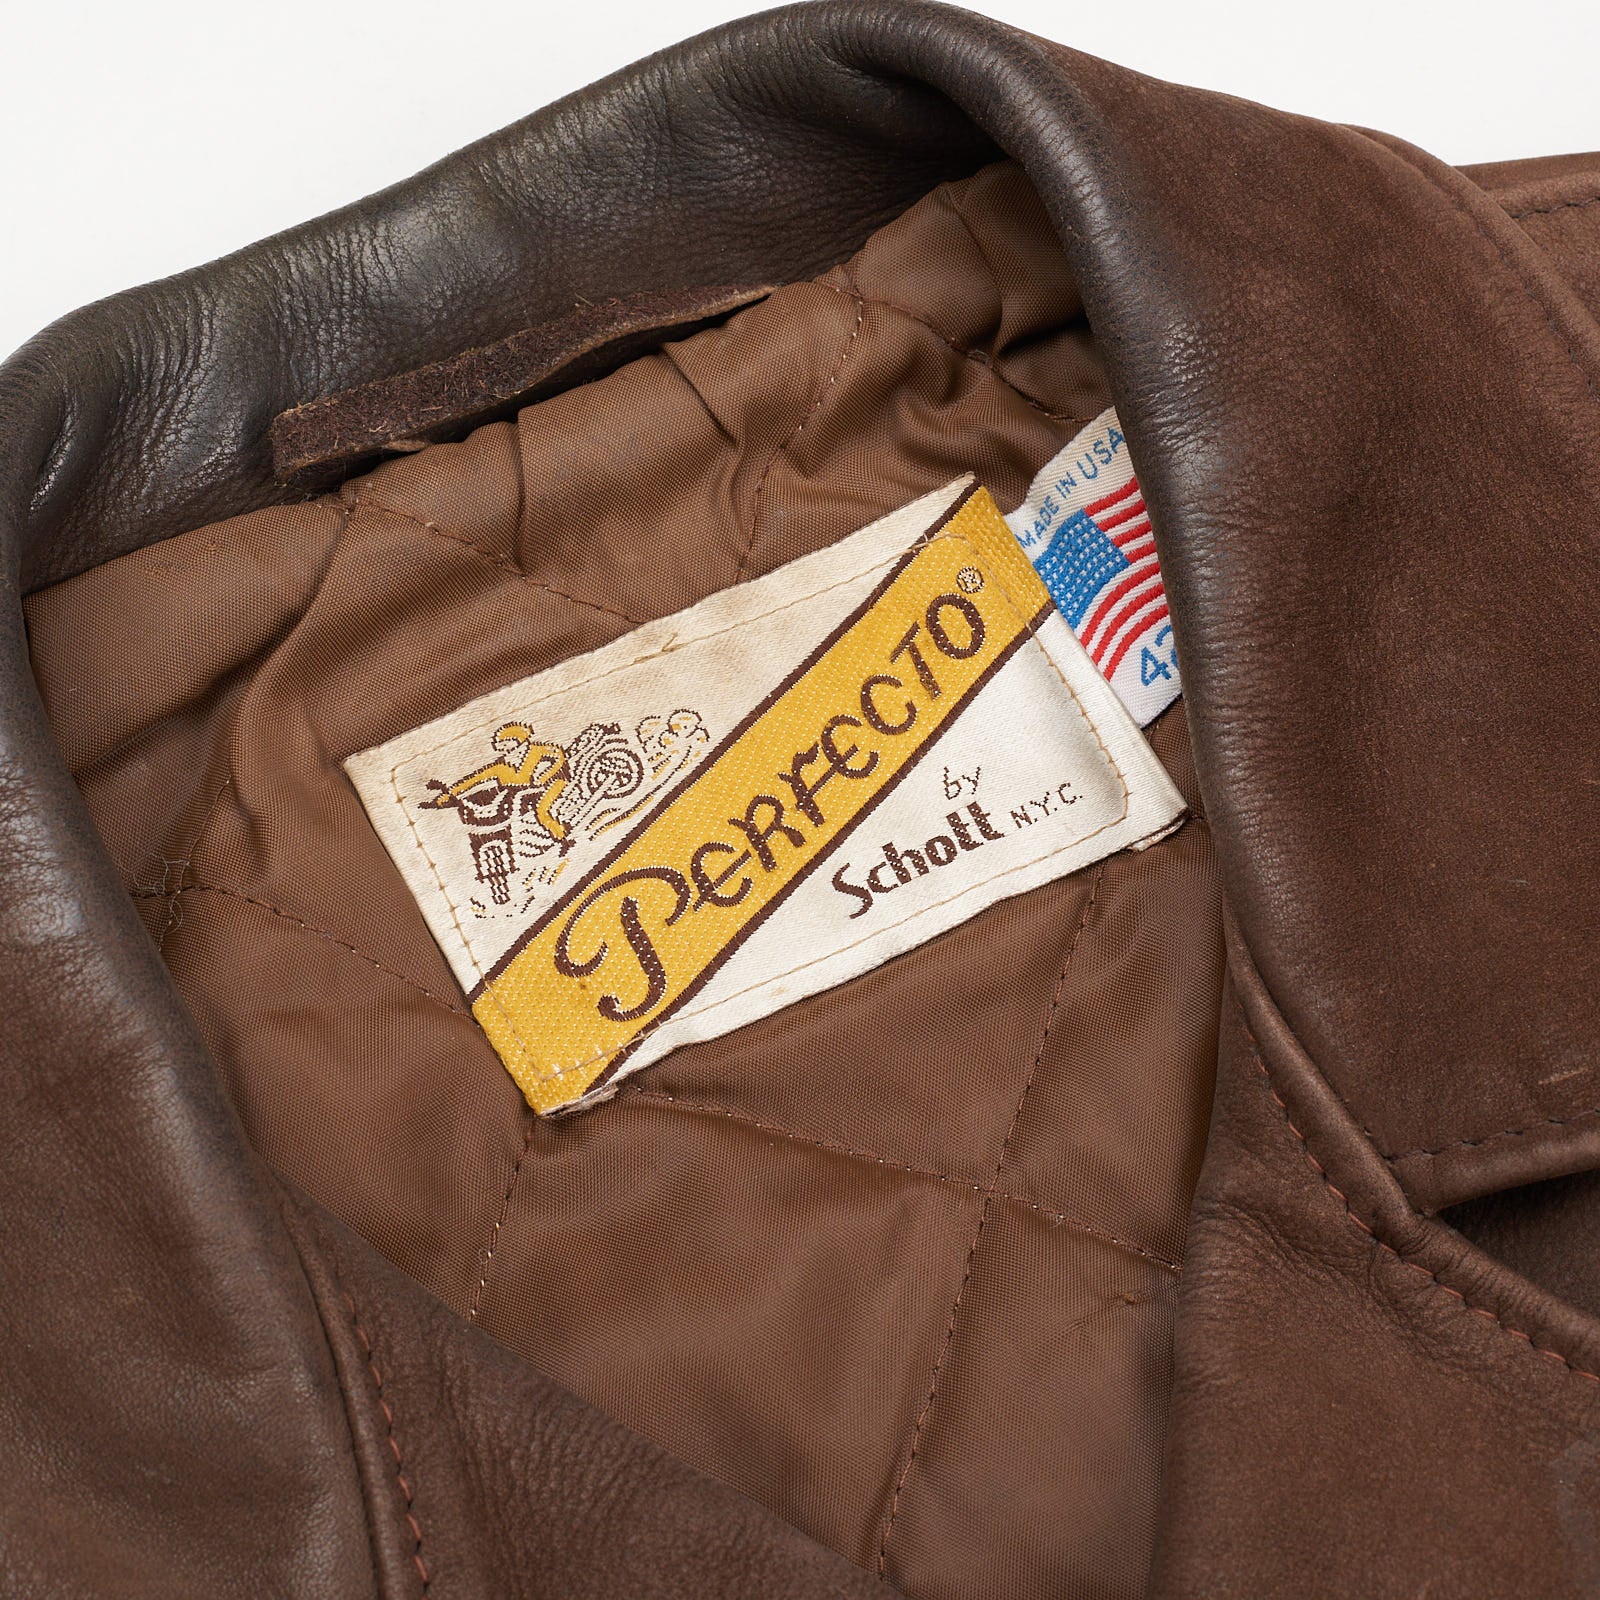 Vintage SCHOTT PERFECTO 150 Brown Steerhide Asymmetrical Biker Jacket Size 42 SCHOTT